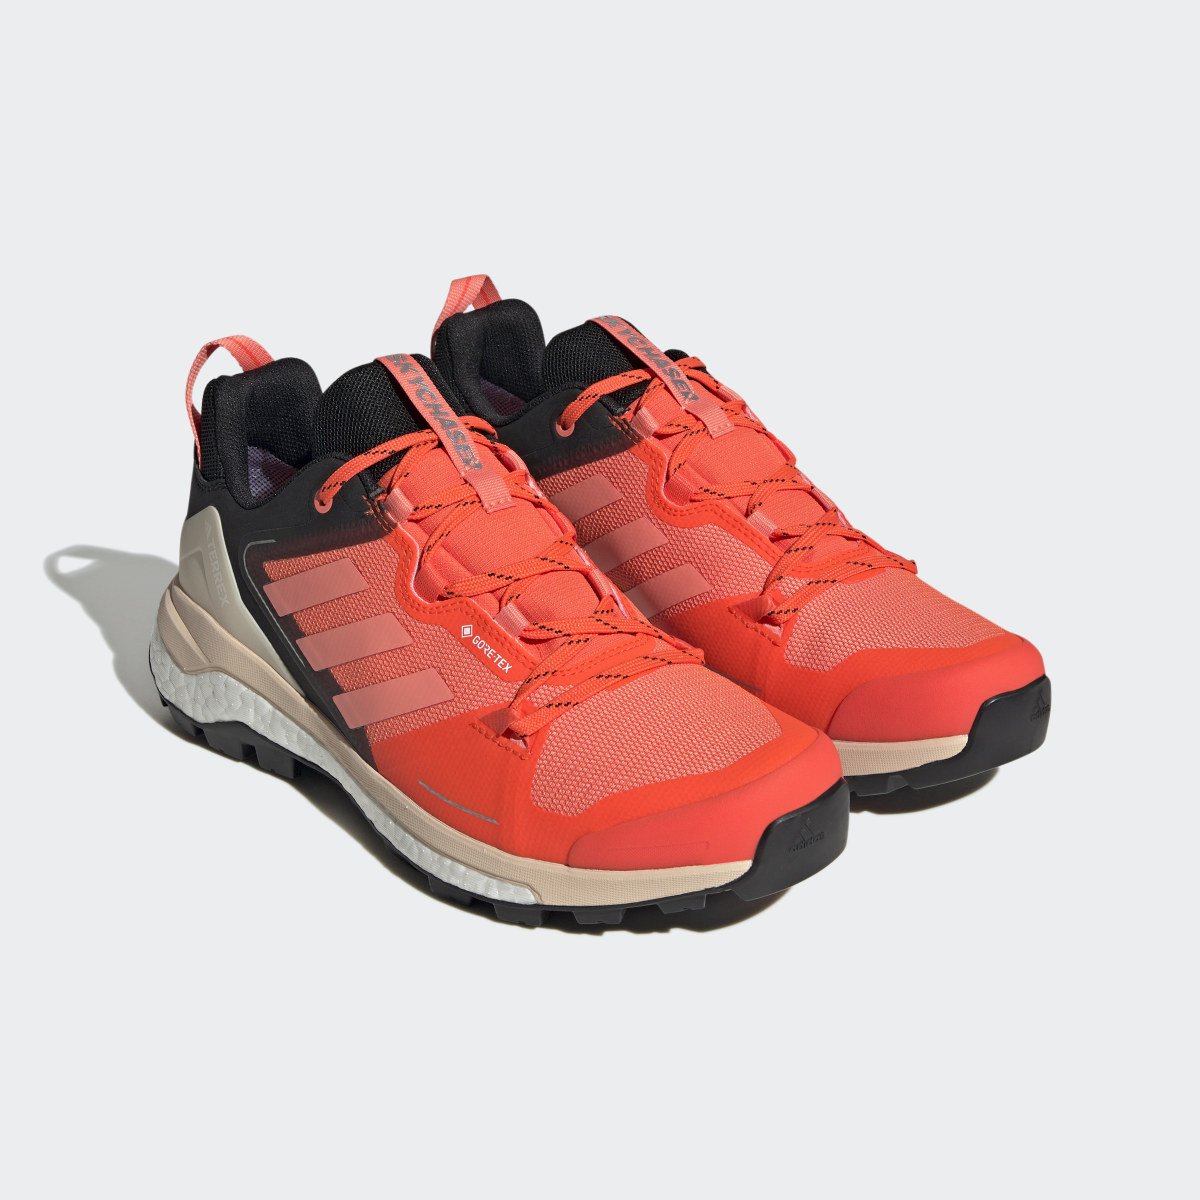 Adidas Terrex Skychaser GORE-TEX 2.0 Hiking Shoes. 5